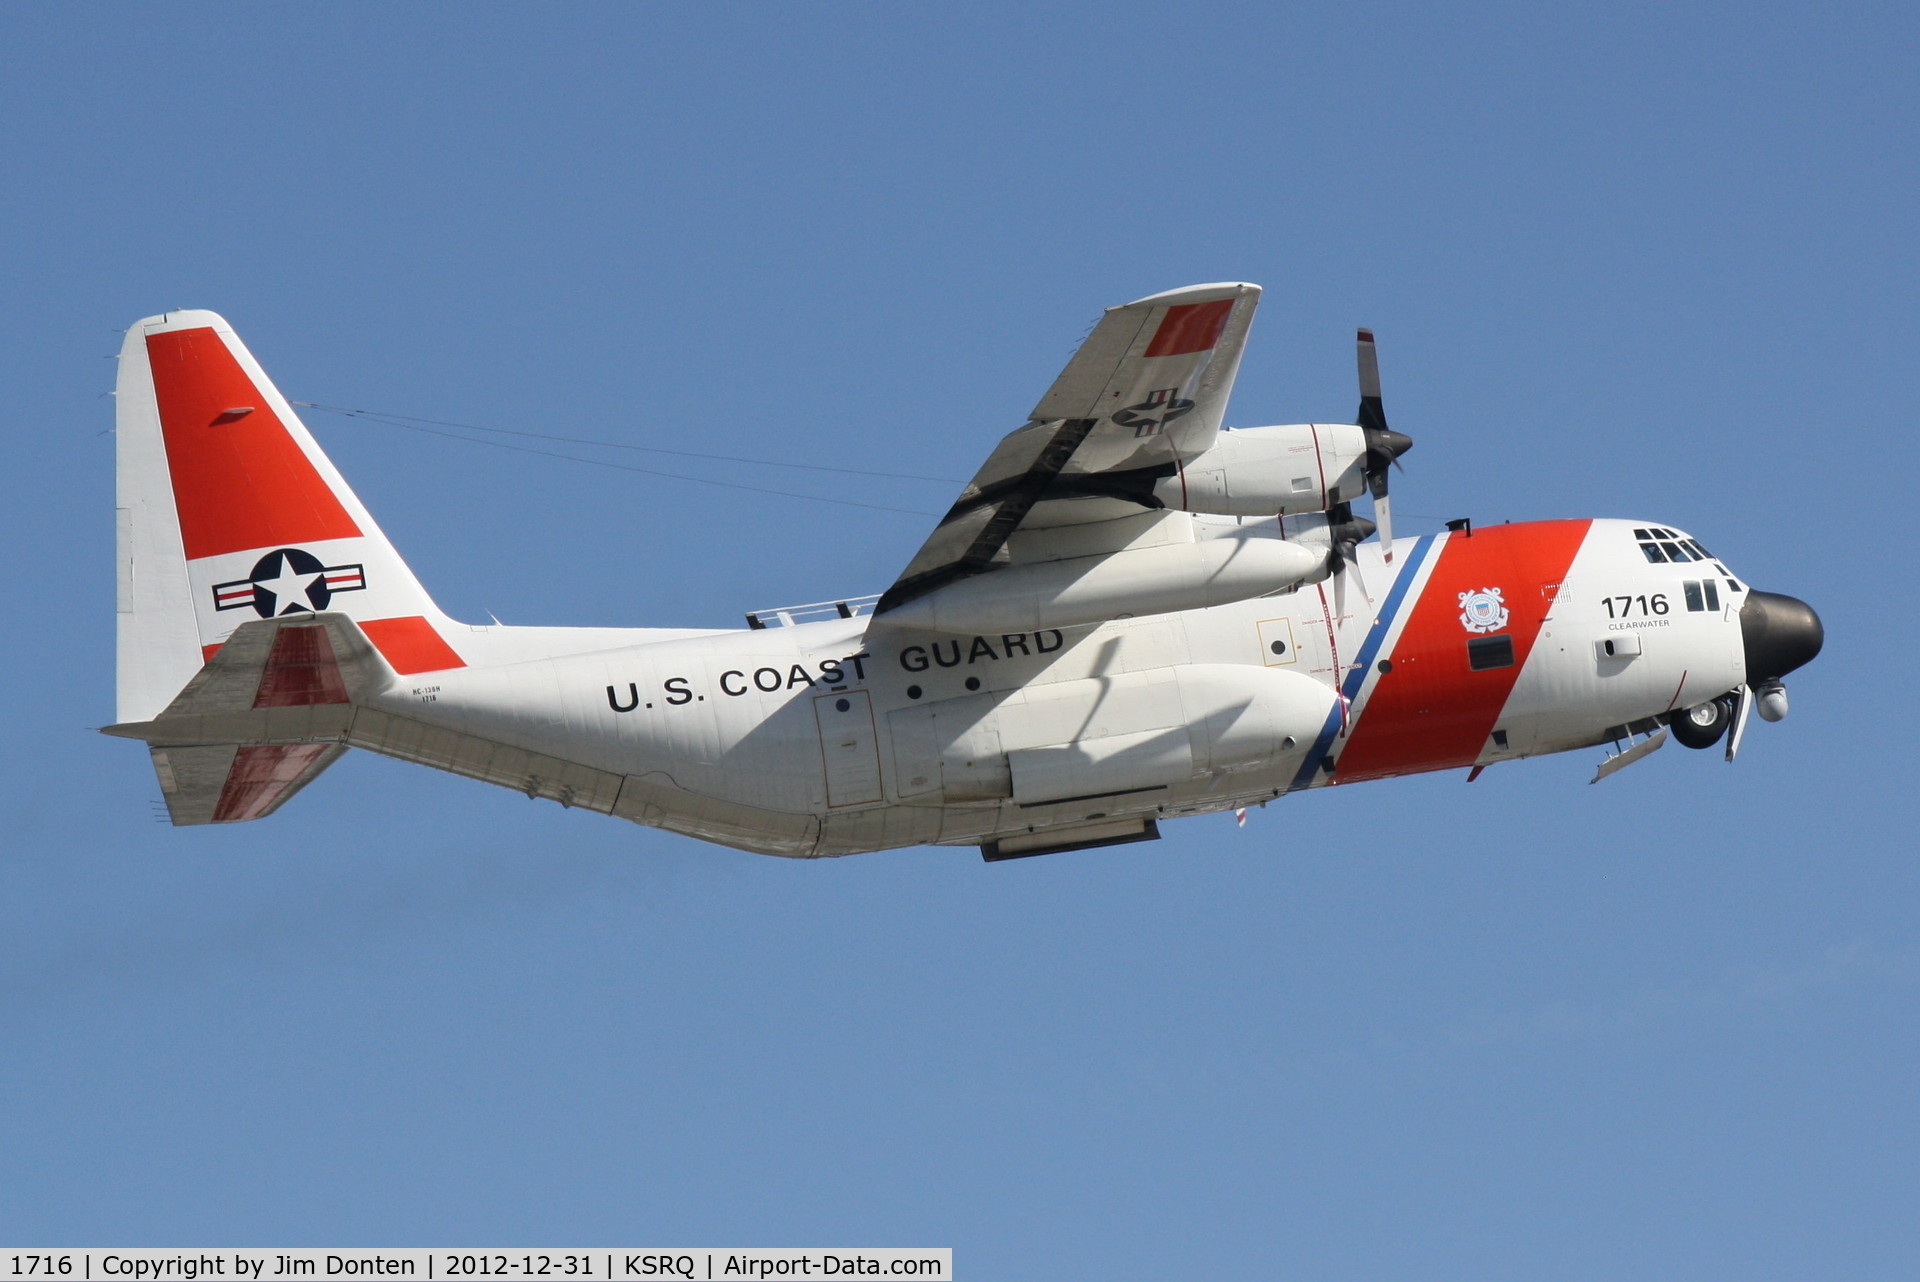 1716, 1985 Lockheed HC-130H Hercules C/N 382-5023, USCG Clearwater 1716 departs Sarasota-Bradenton International Airport